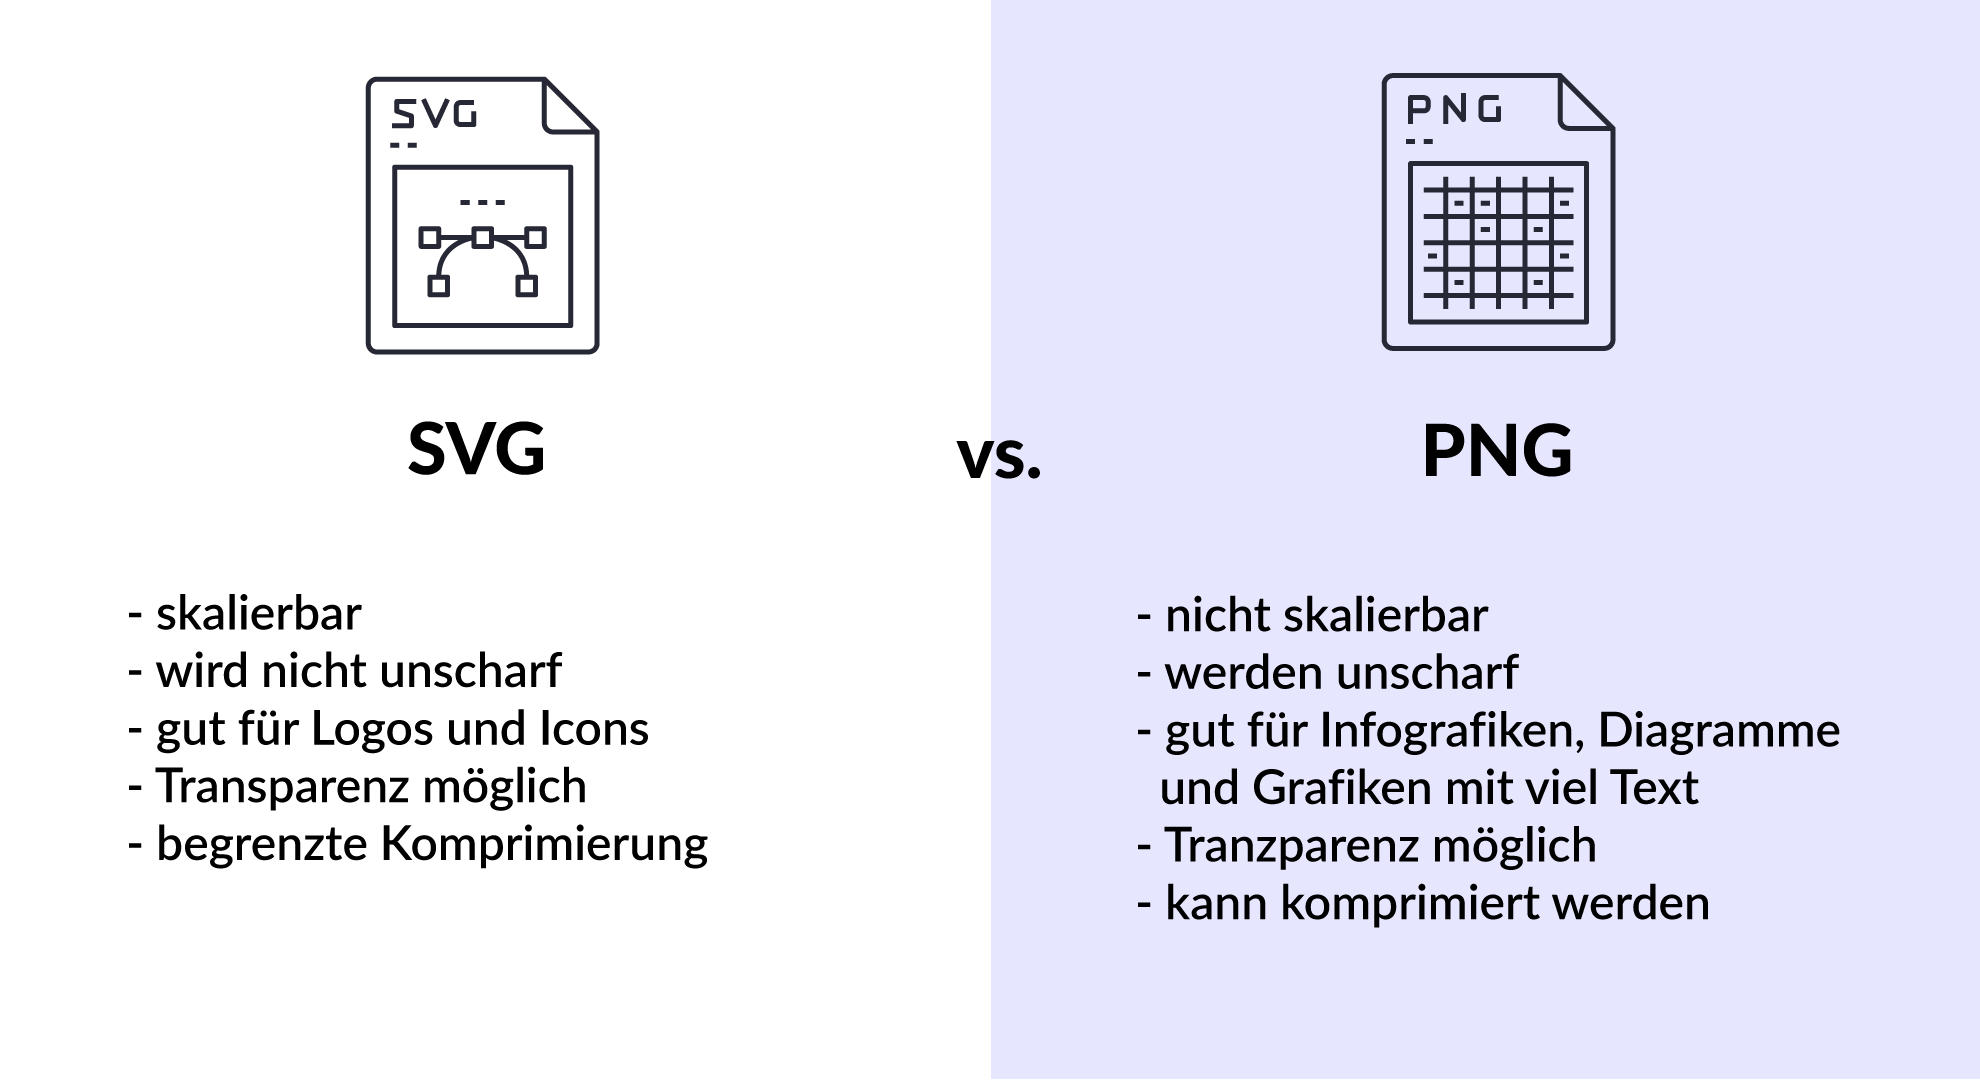 SVG vs Png